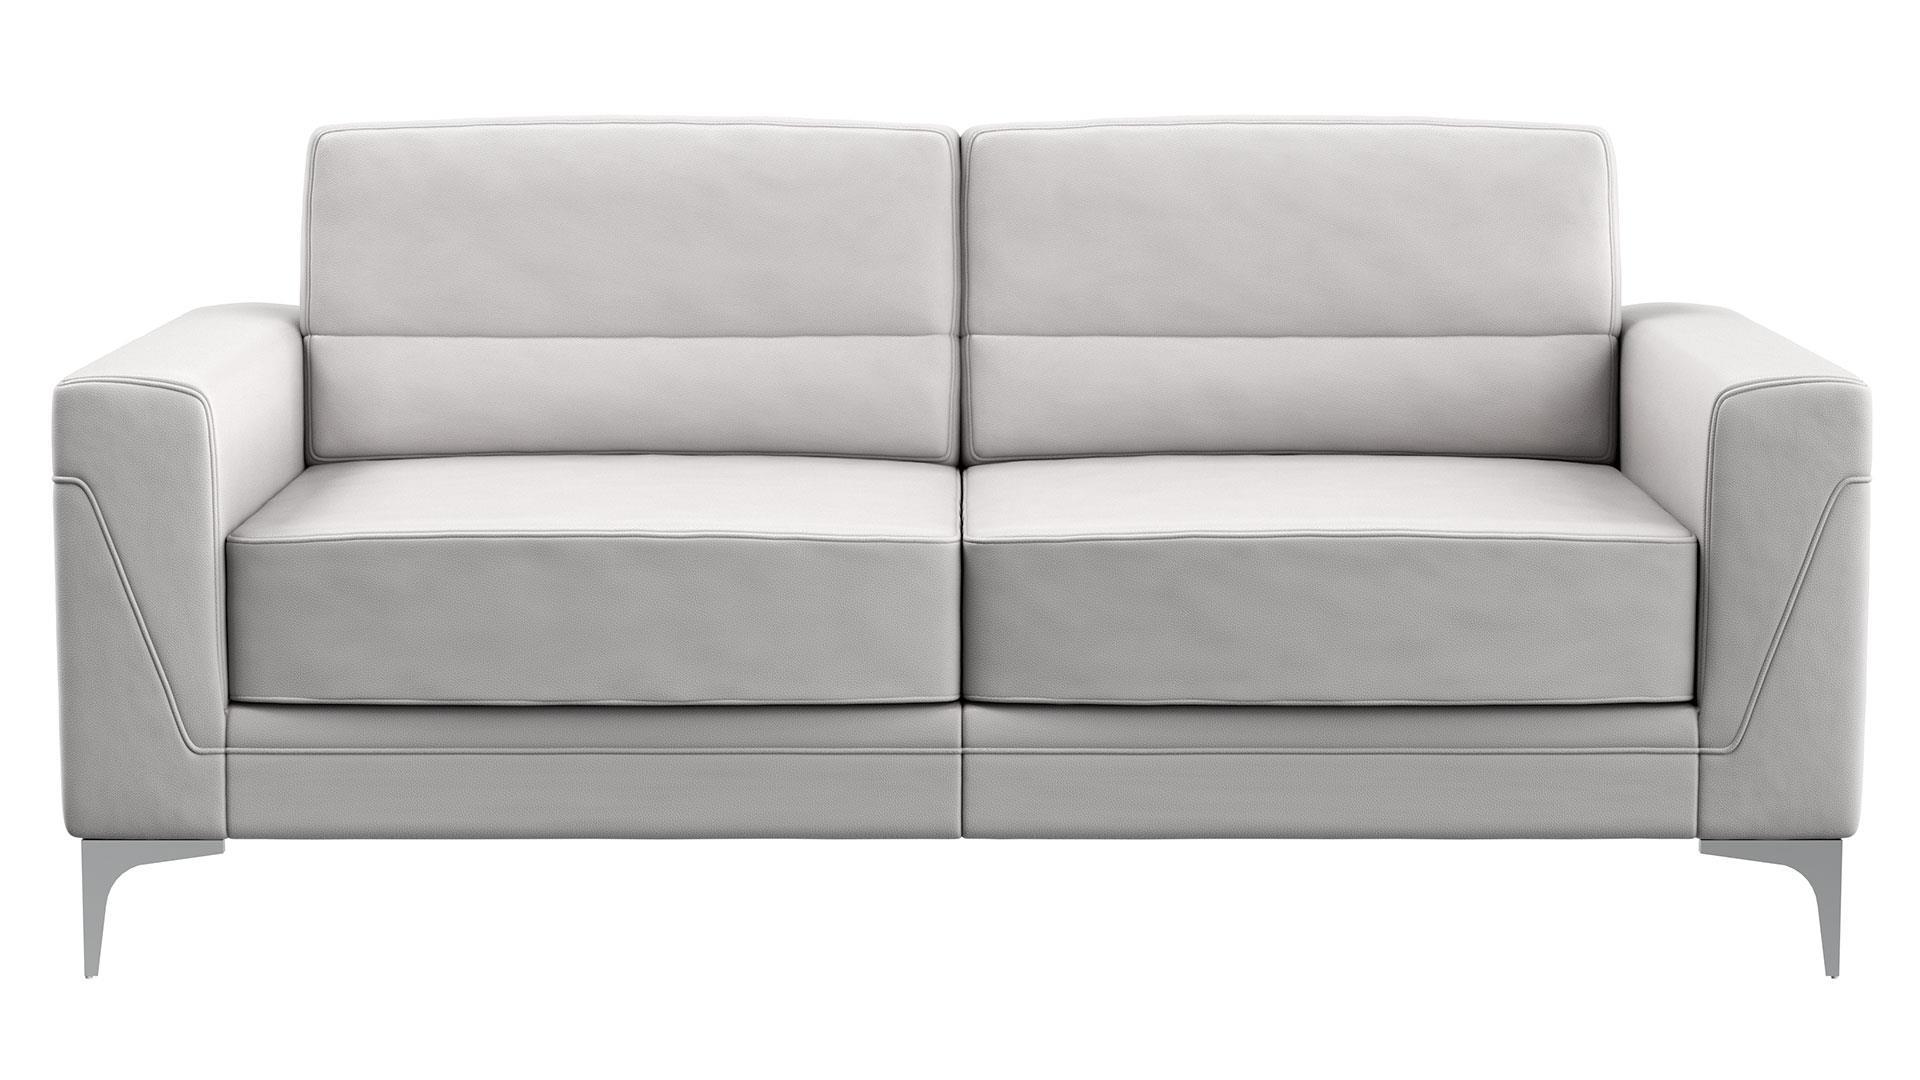 

    
U6109-S/L/C Global Furniture USA Sofa Loveseat and Chair Set
